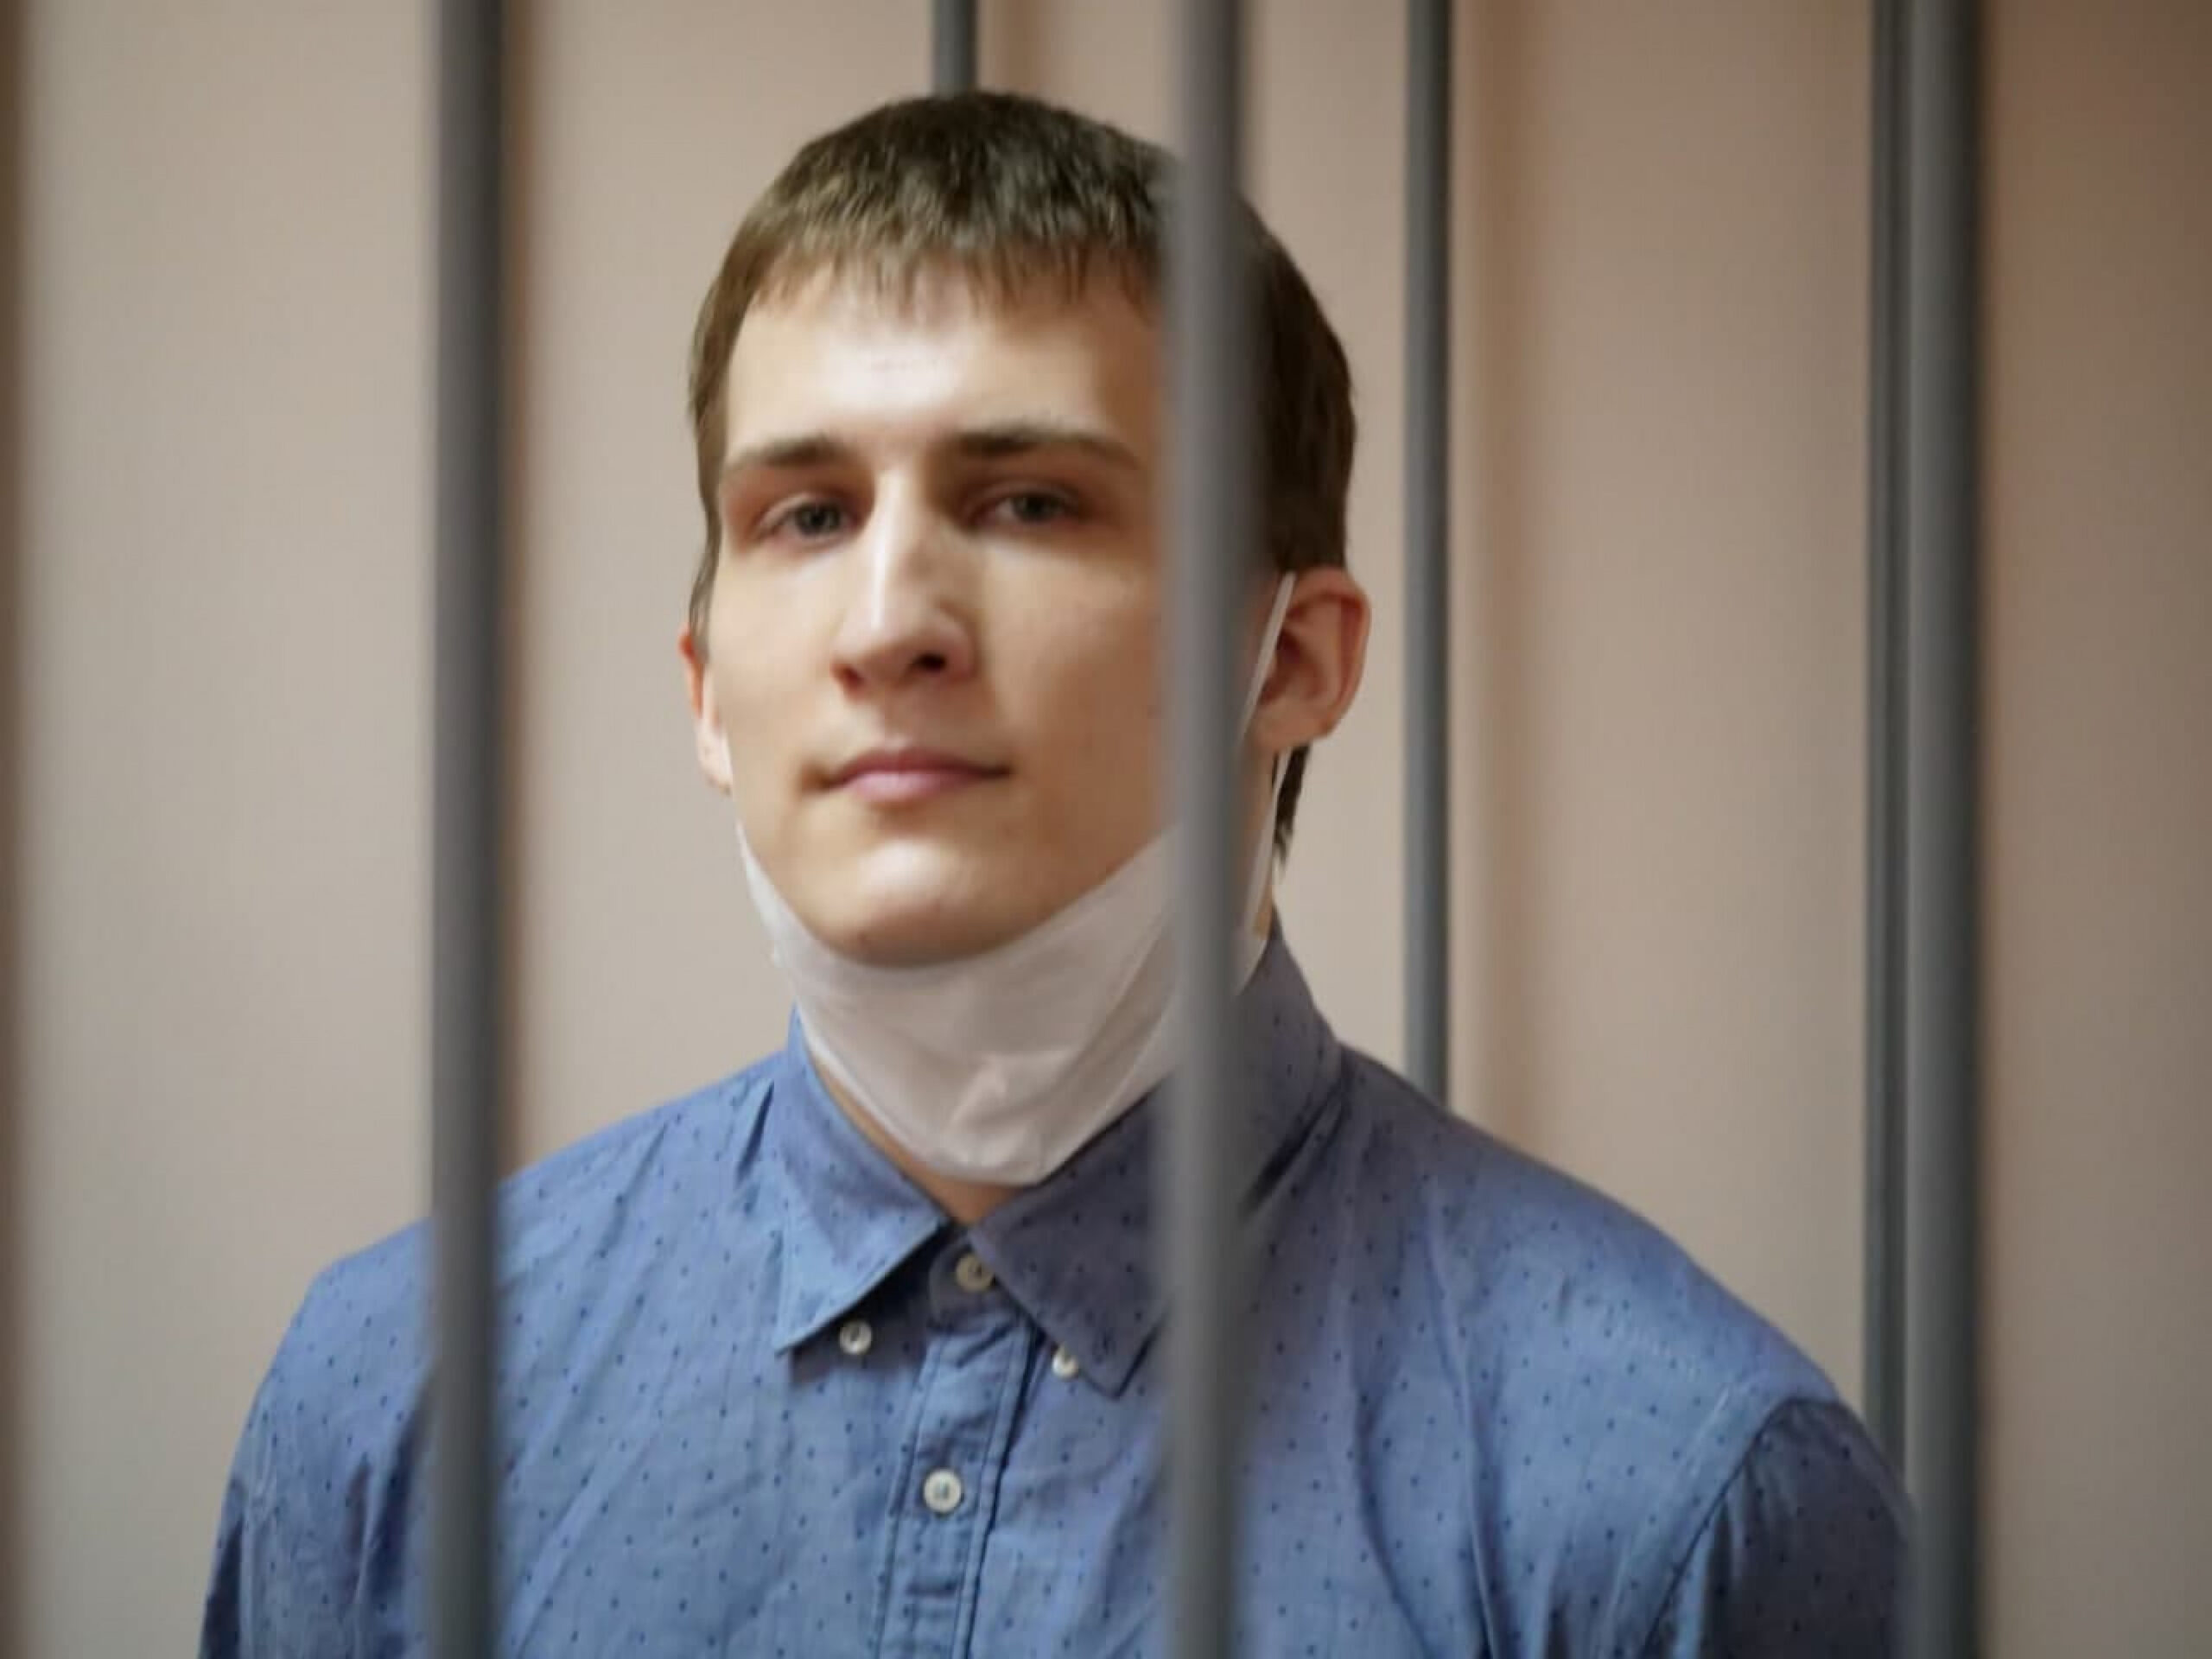 Pavel Larchyk is a political prisoner